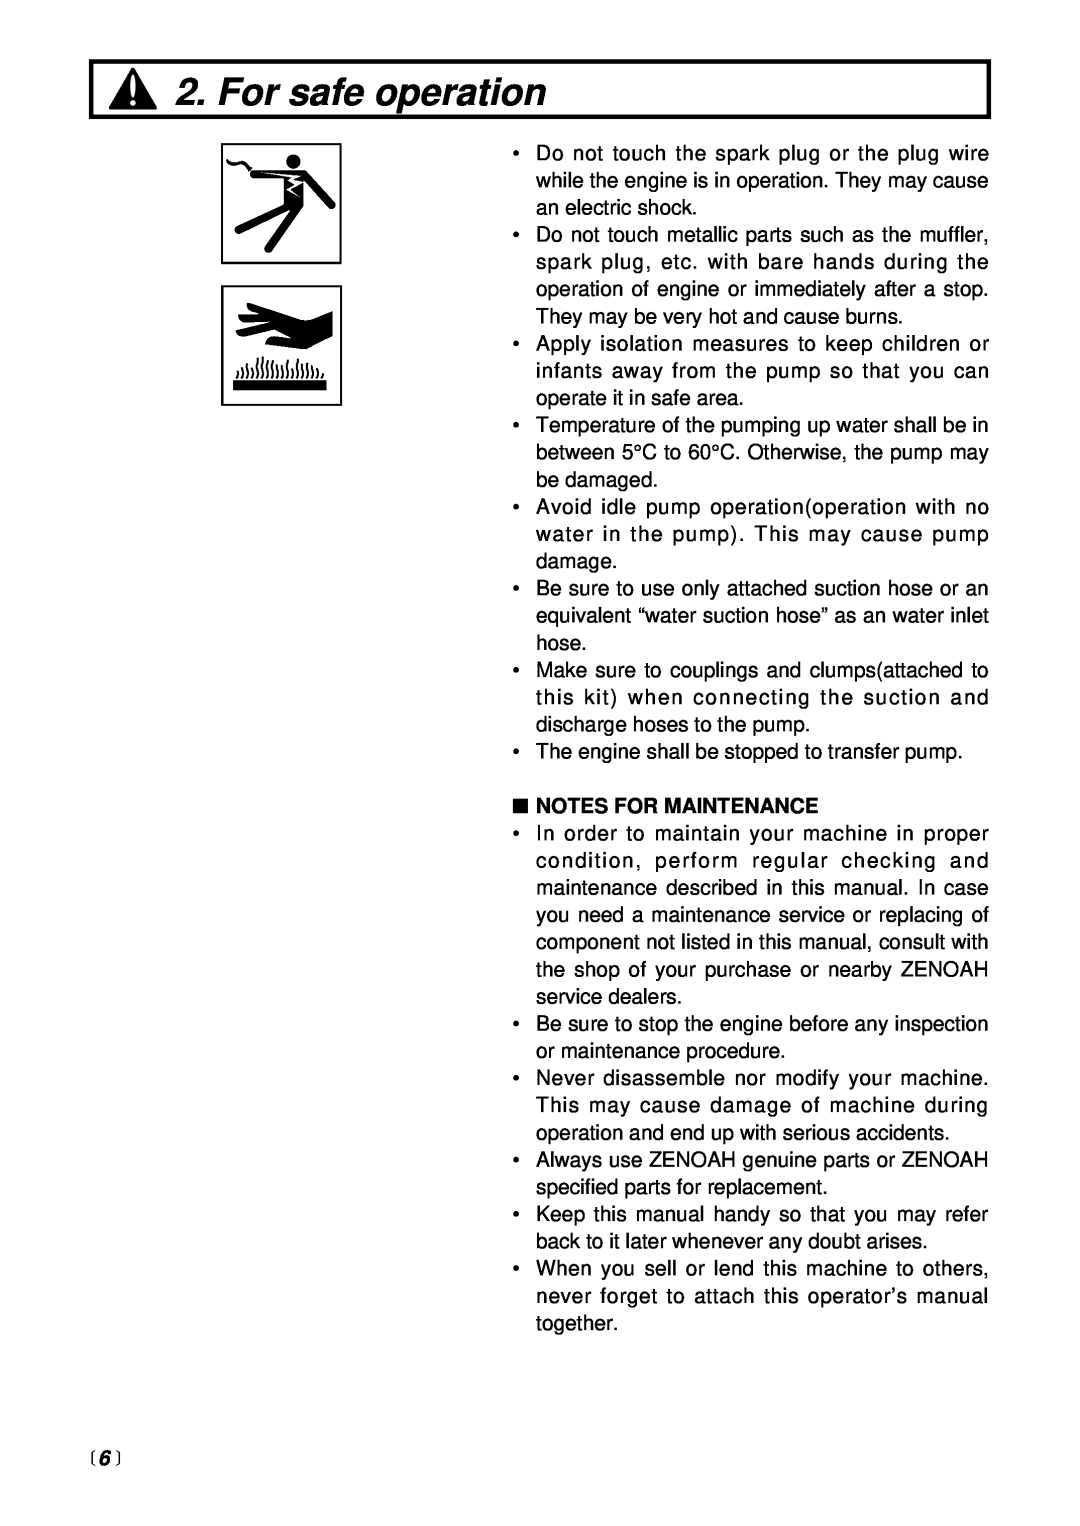 Zenoah PE2500H manual For safe operation, 6 , Notes For Maintenance 